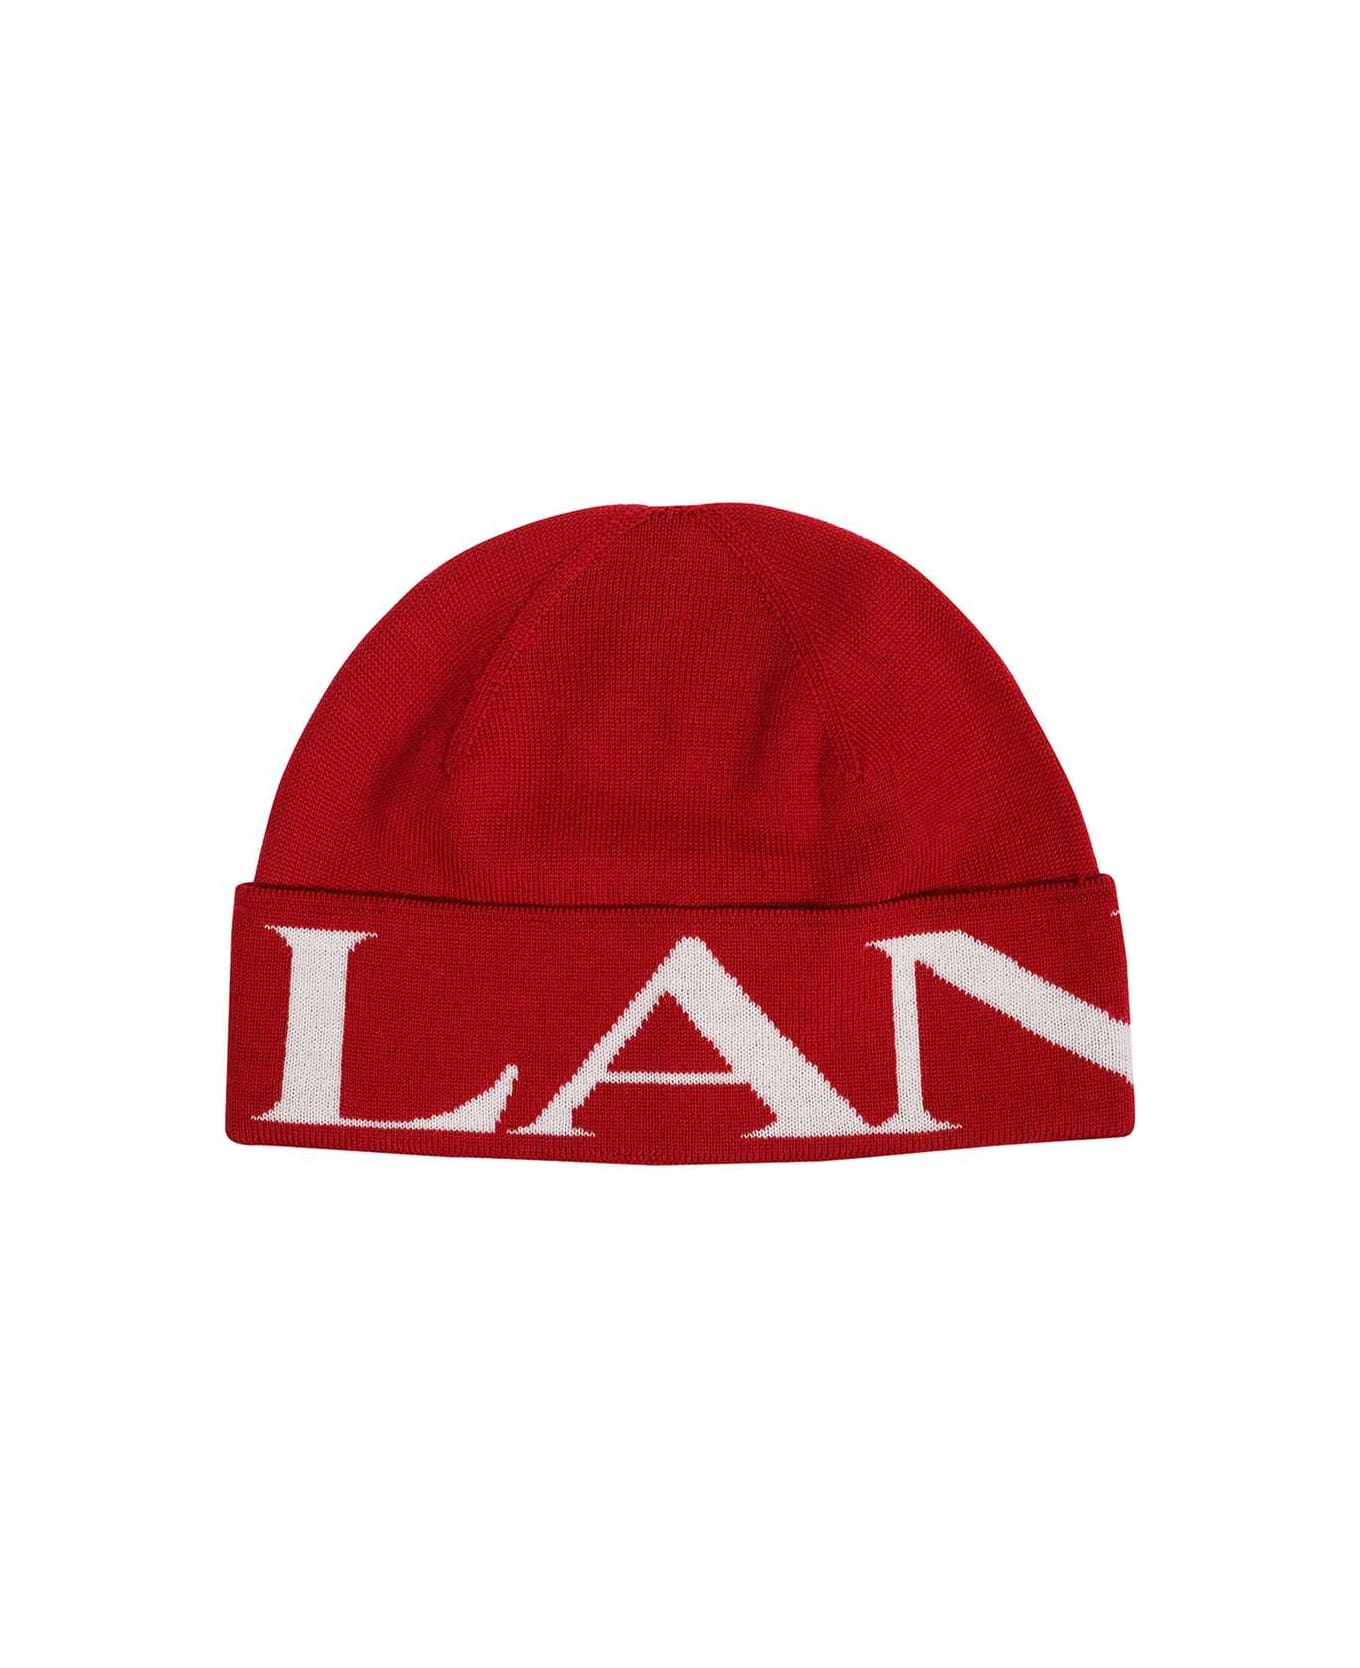 Lanvin Wool Hat - red